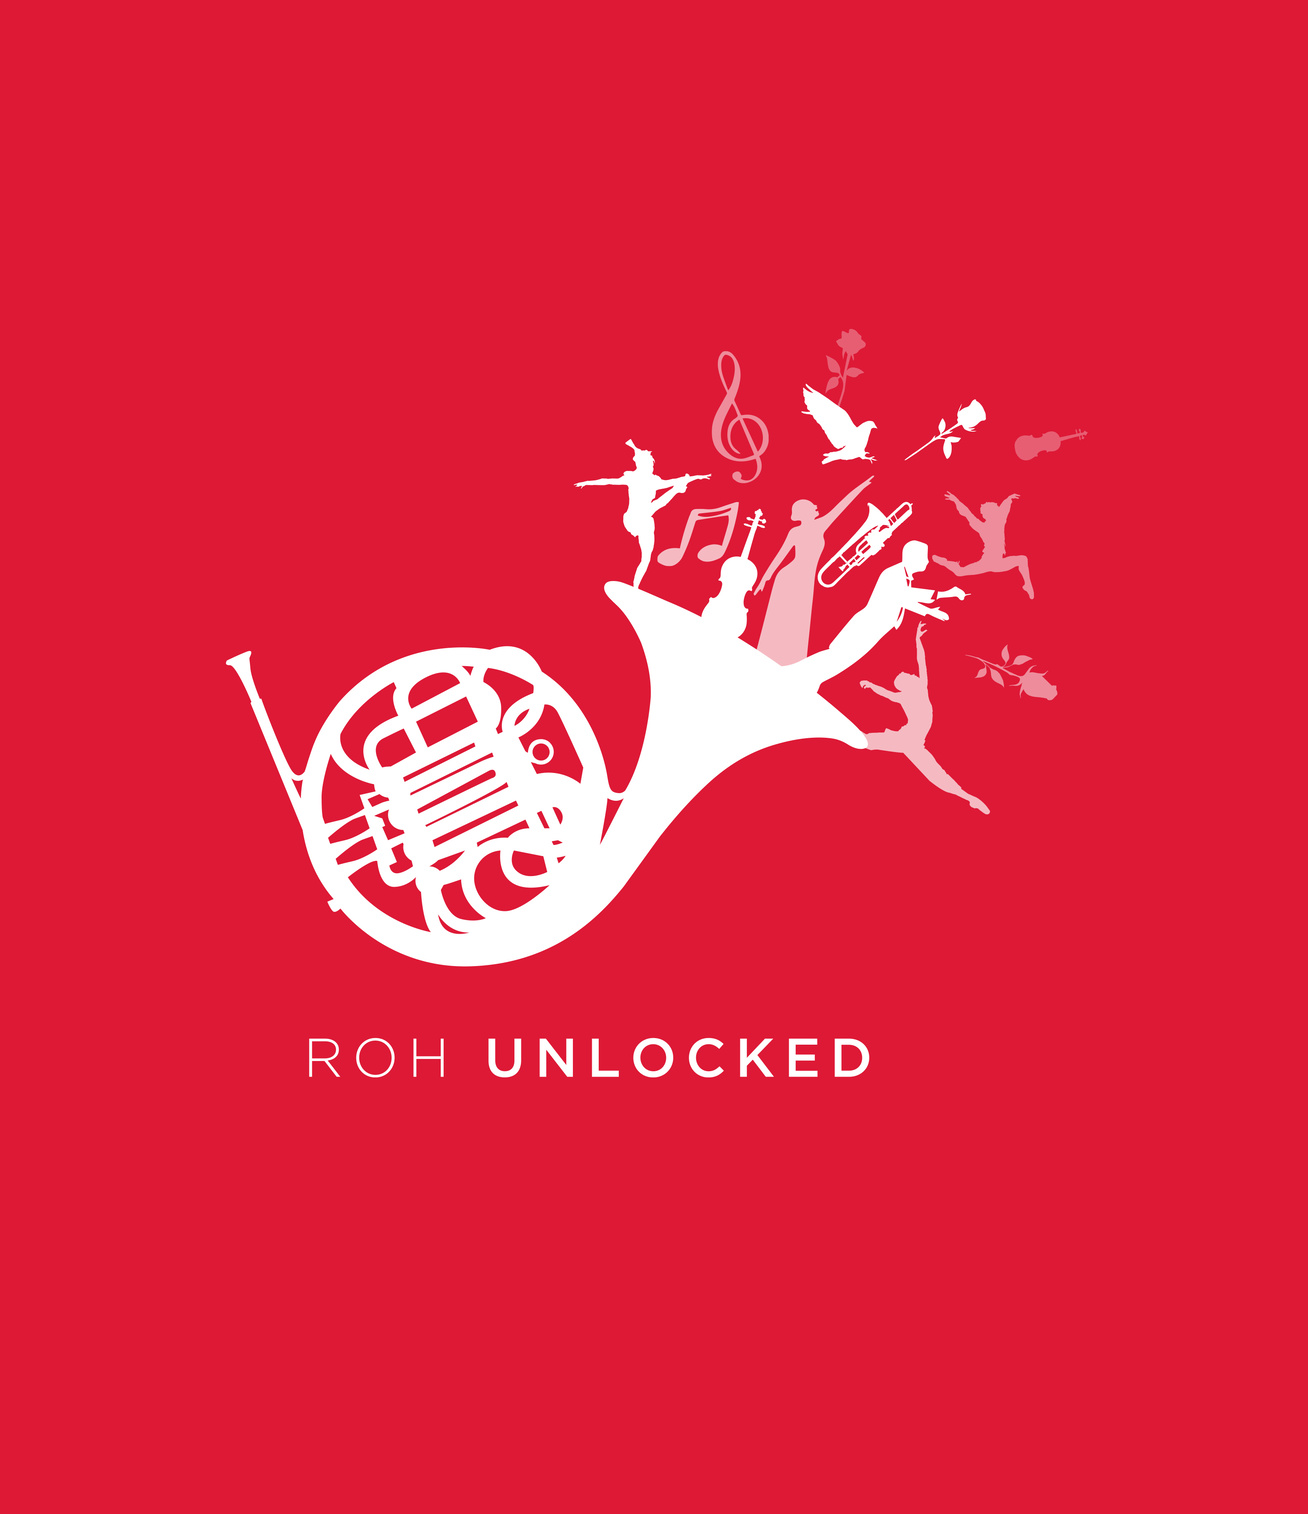 ROH unlocked logo